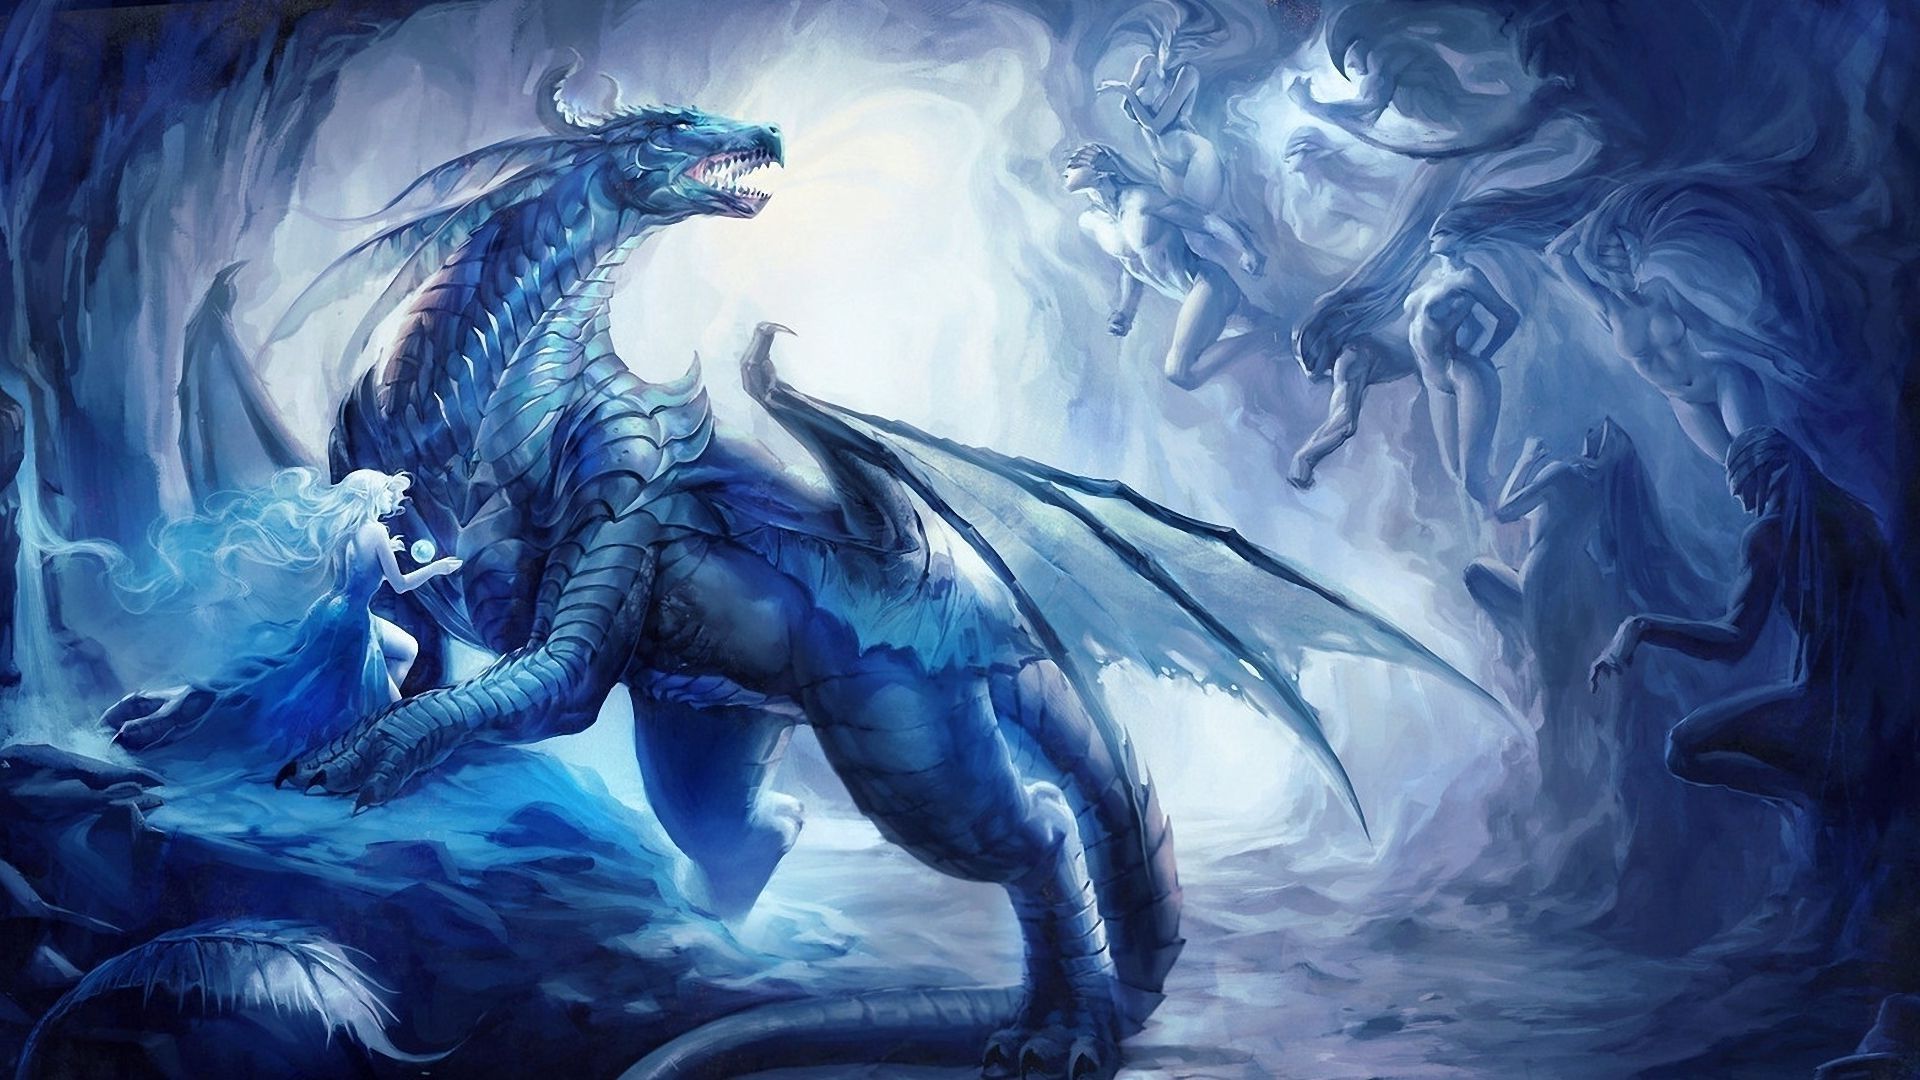 2001x1328px 713.66 KB Blue Dragon